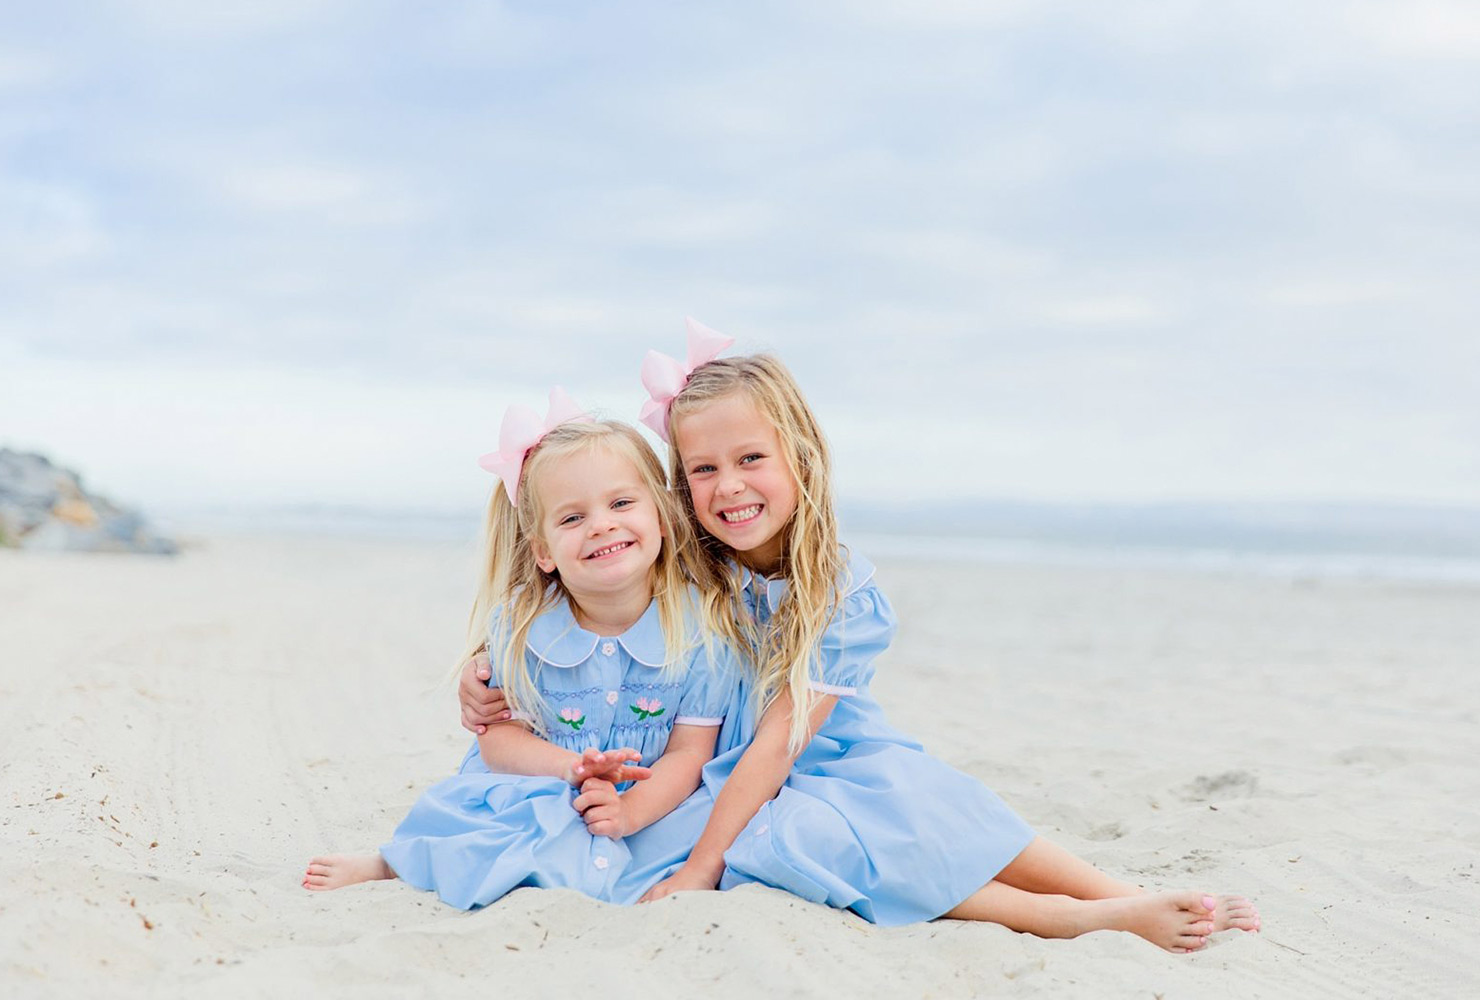 sibling photo ideas sisters beach